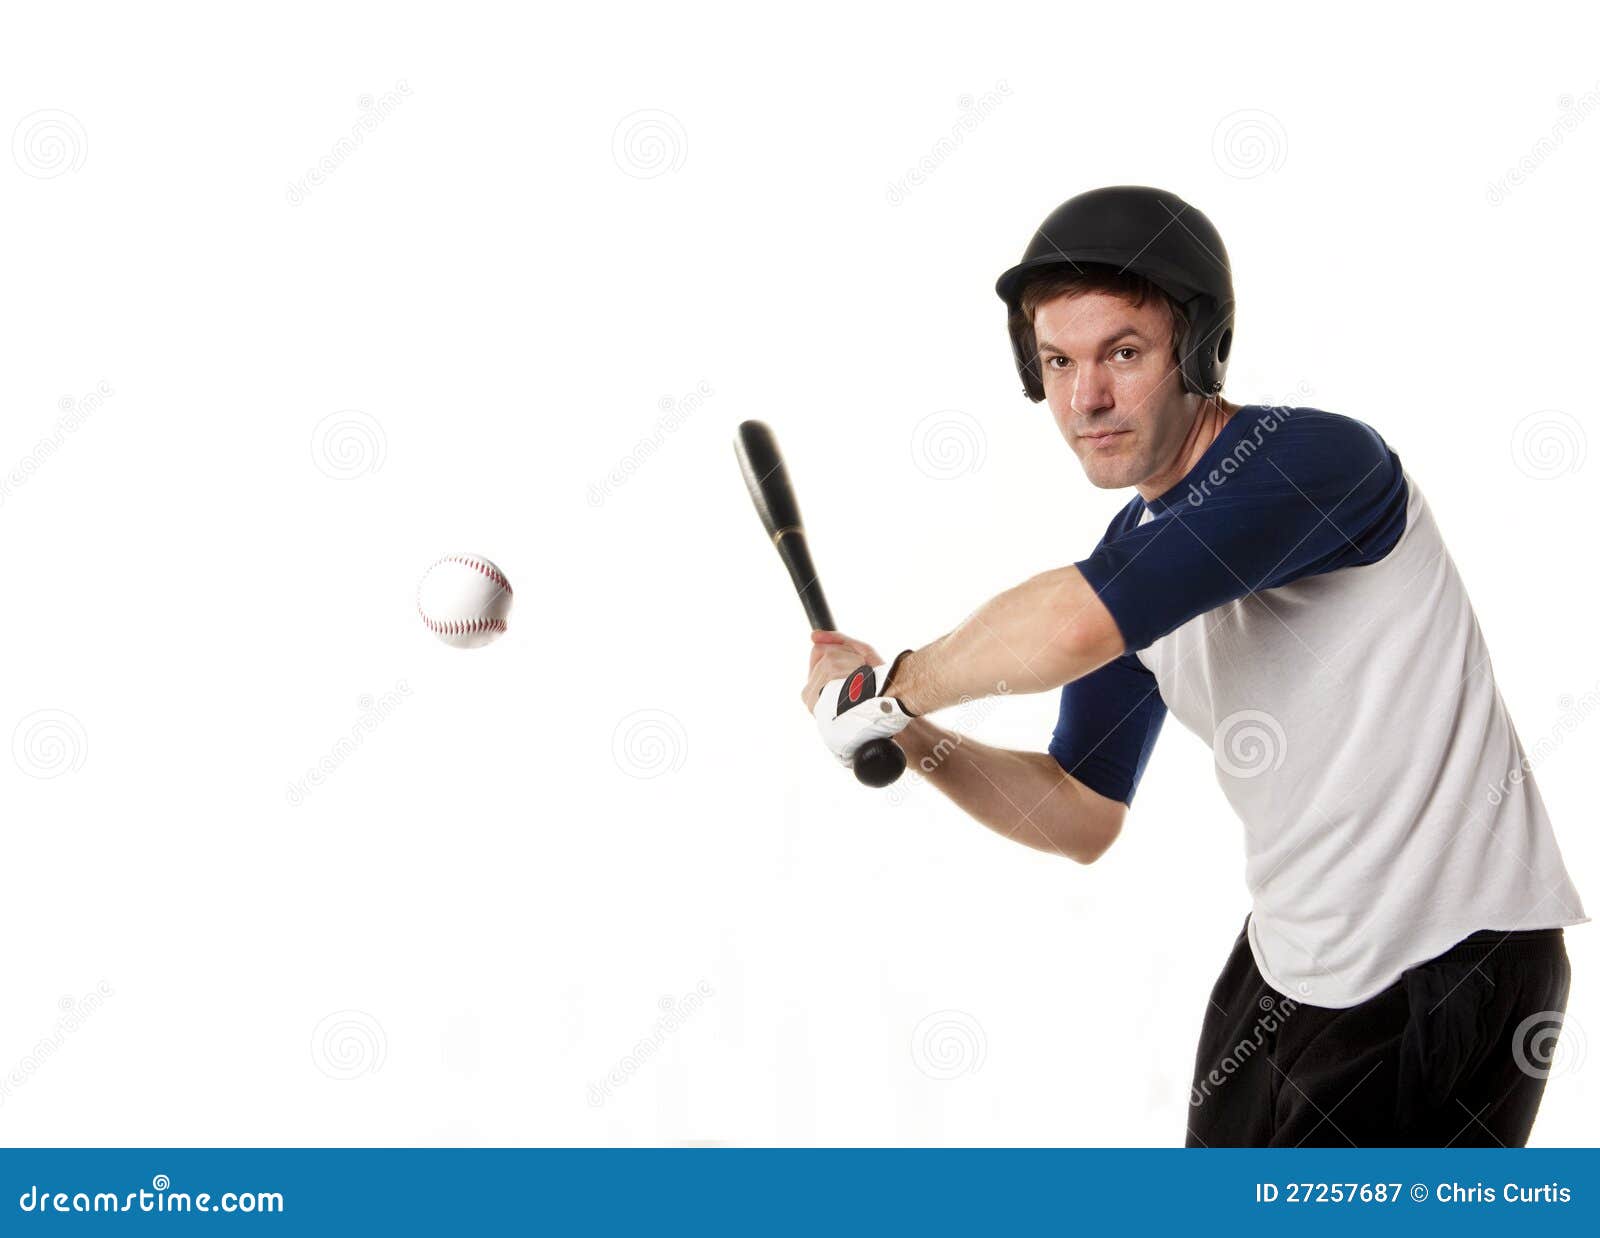 Бейсбол удар по мячу. Hitting a Ball. Eyeball hitting a Ball. Ron hitting the Ball. Hit player